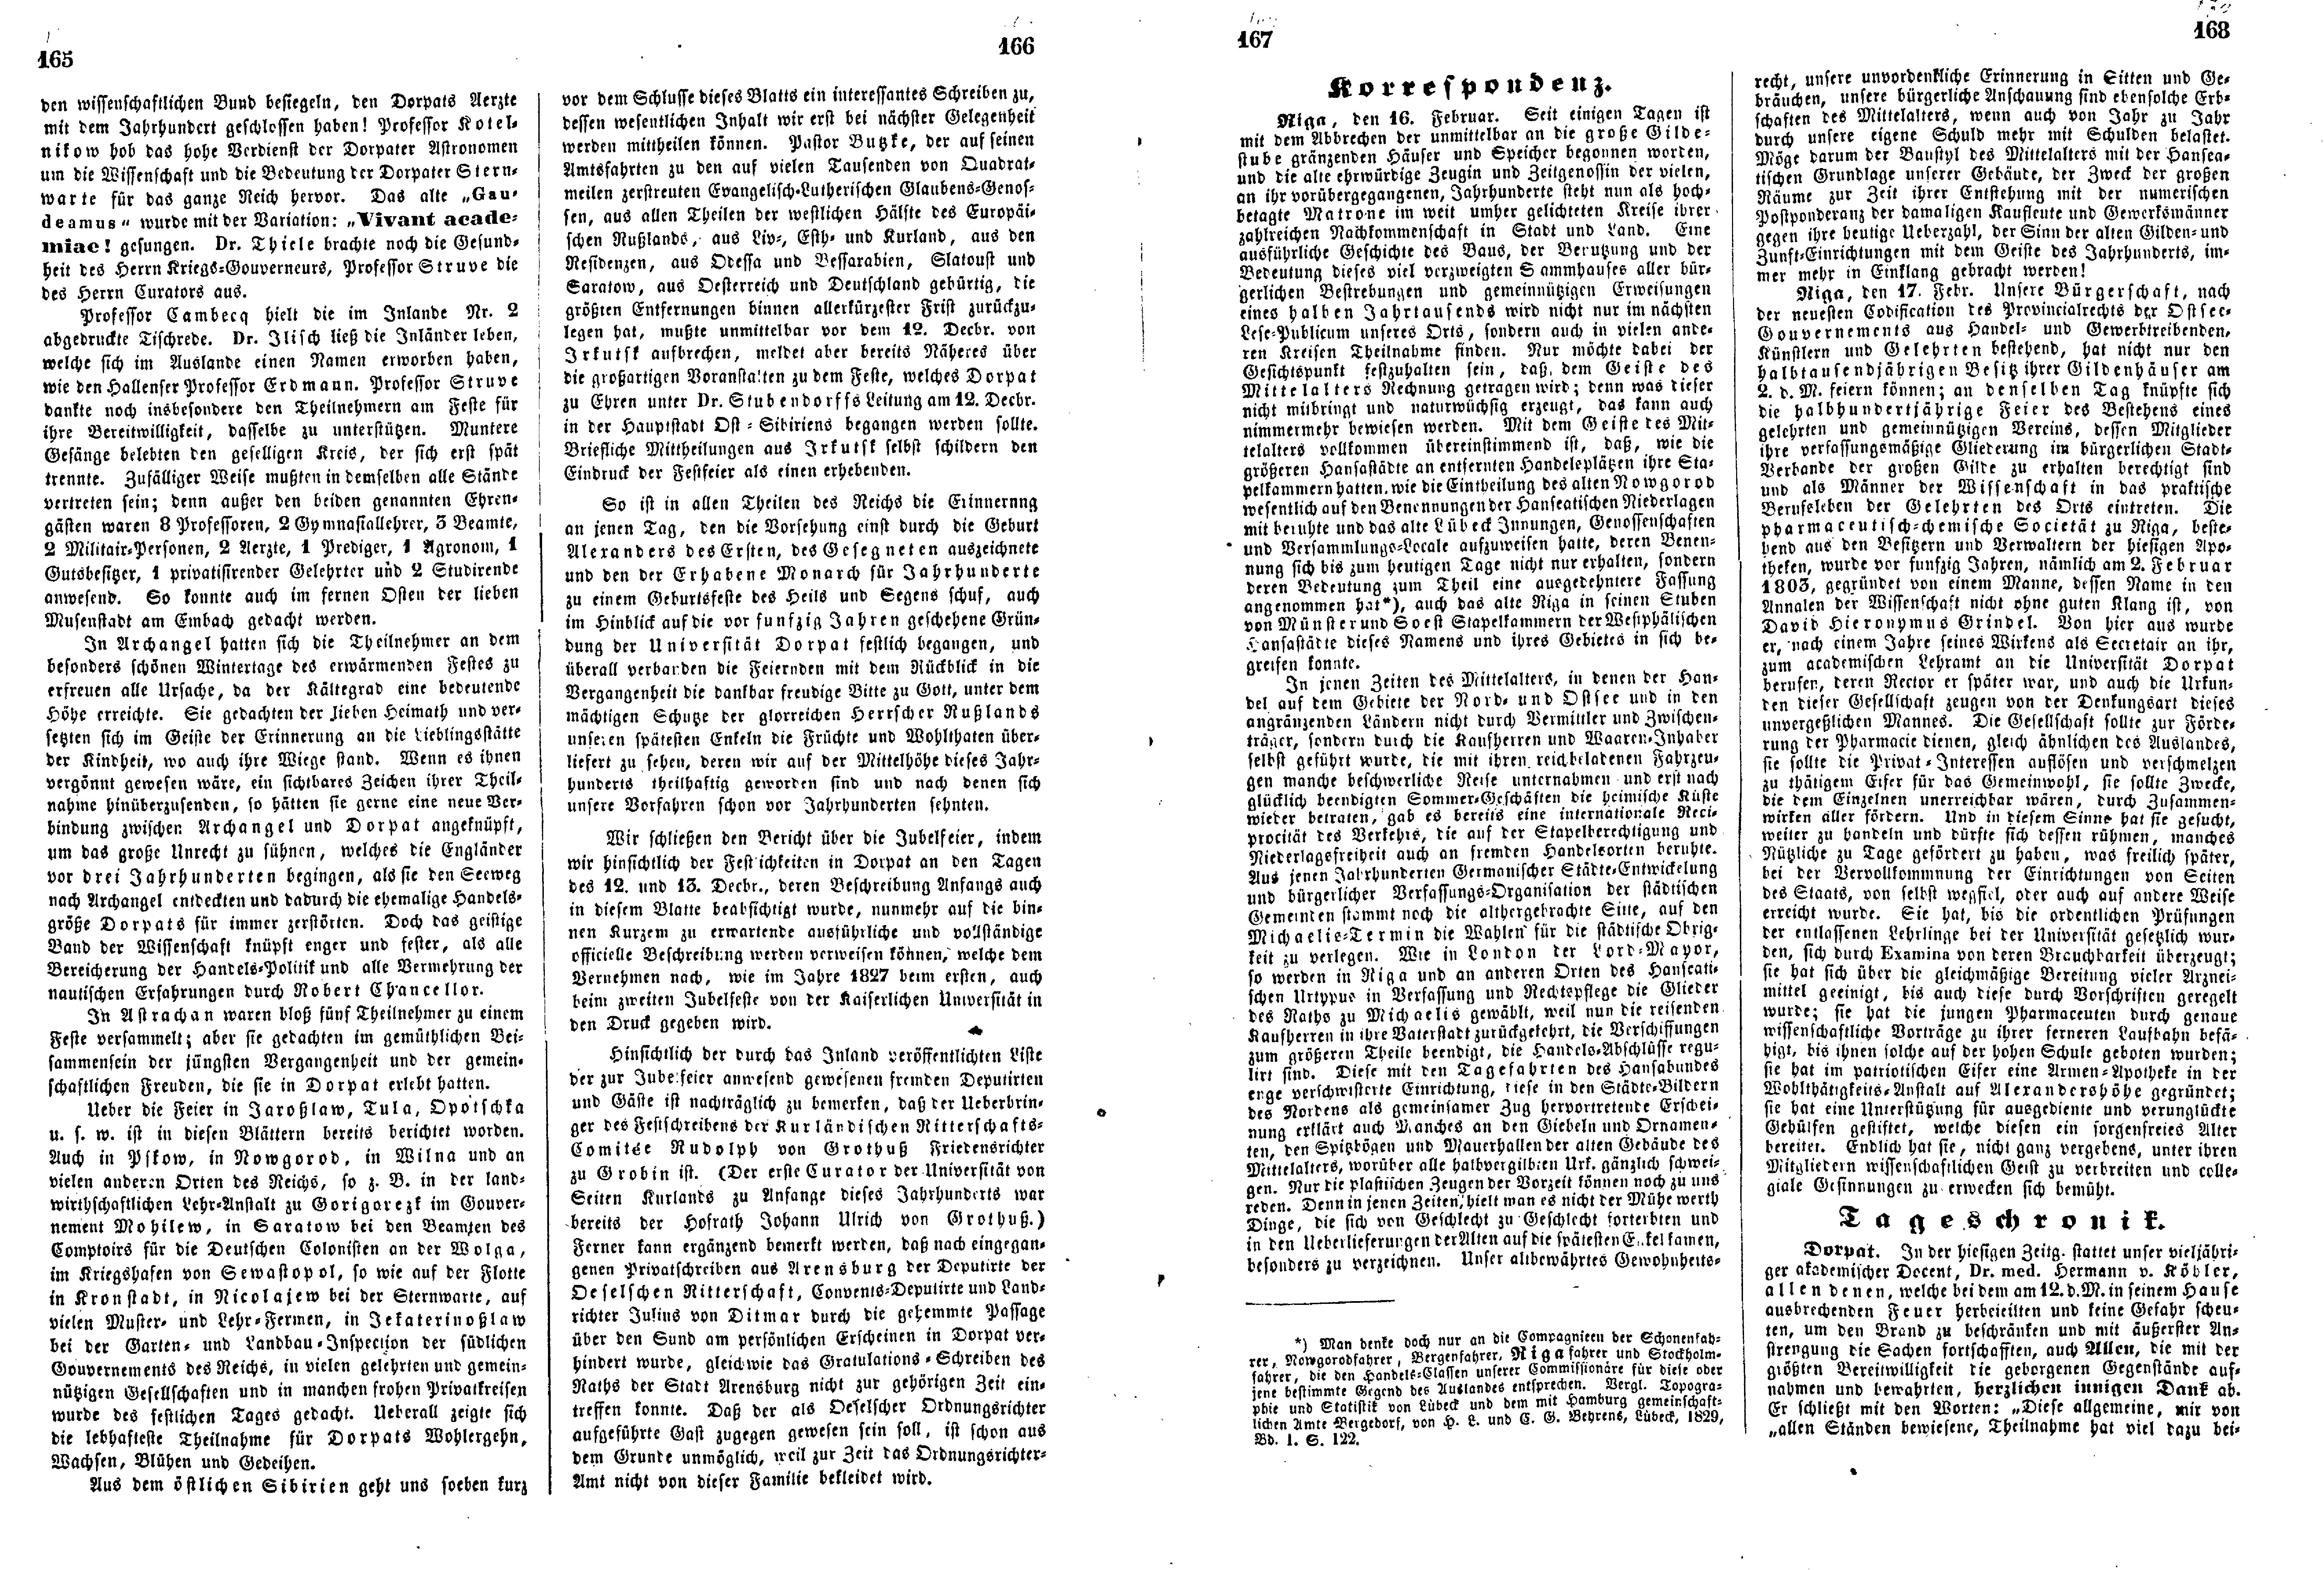 Das Inland [18] (1853) | 52. (167-170) Main body of text